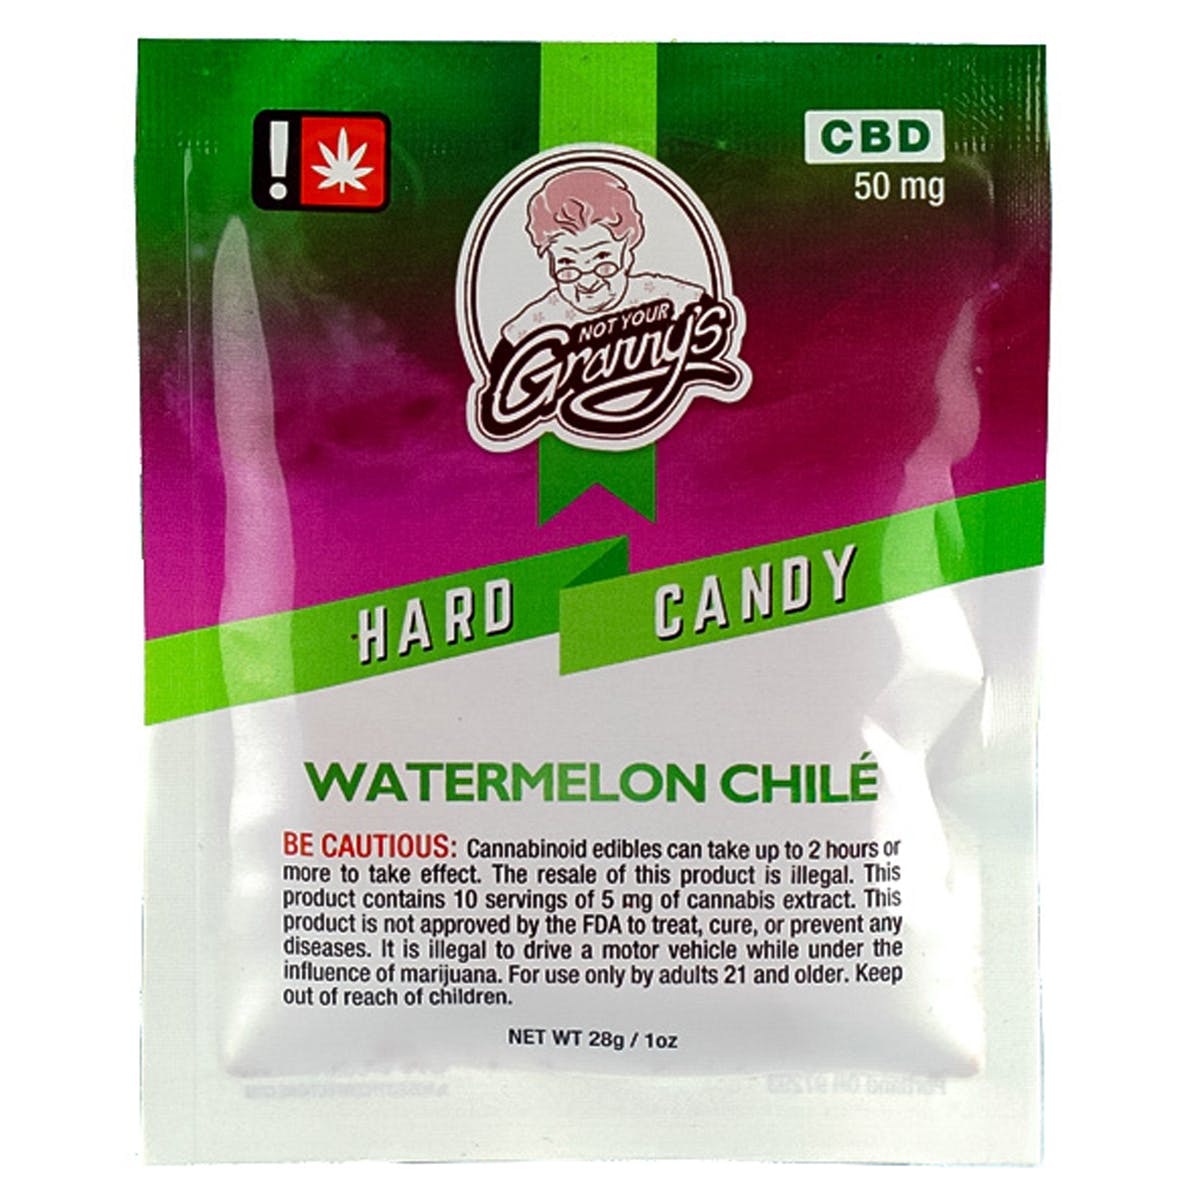 Hard Candy - Watermelon Chile CBD 50mg